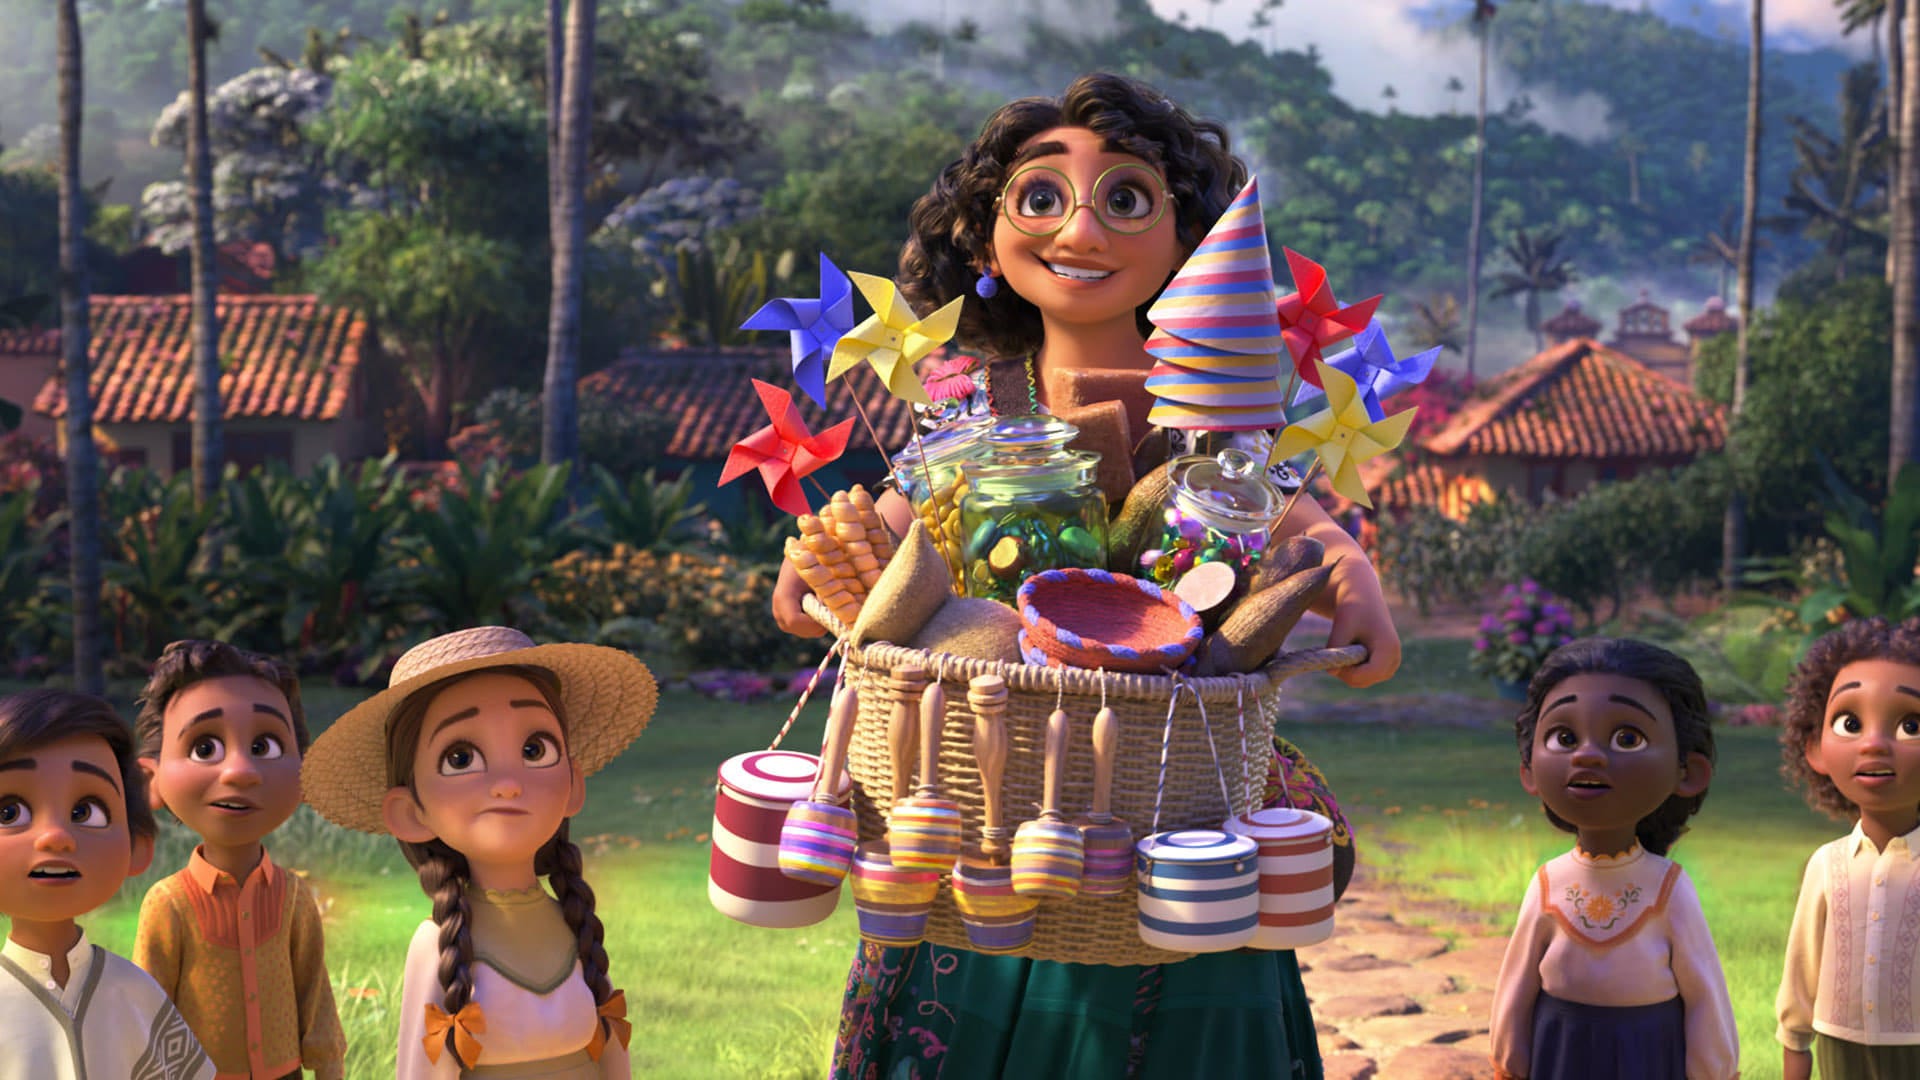 Mirabel holding a basket full of party stuff, children standing alongside her